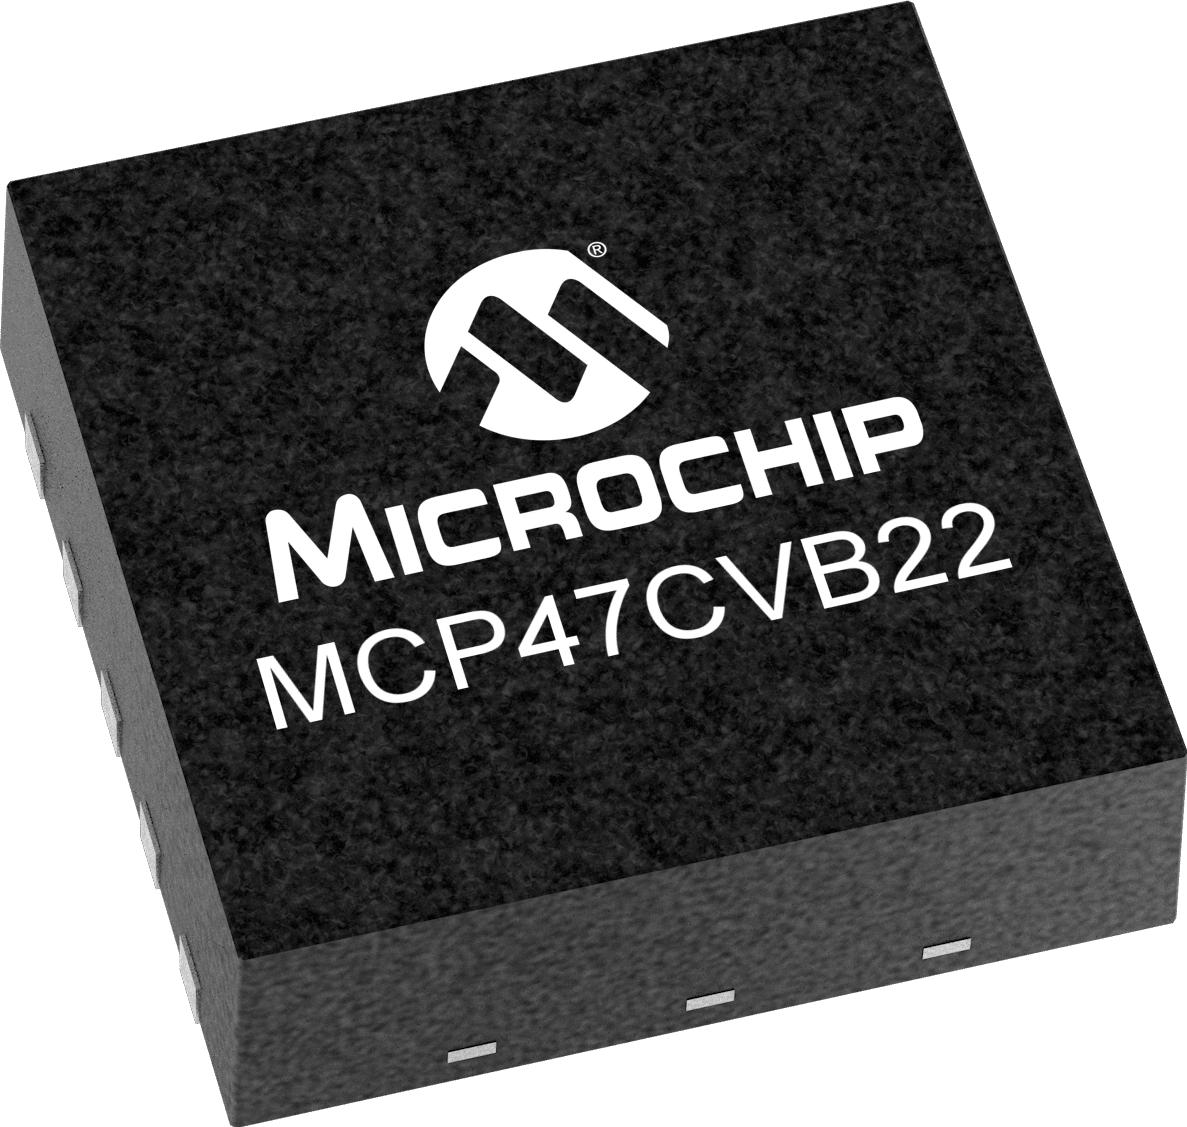 MCP47CVB22-E/MF